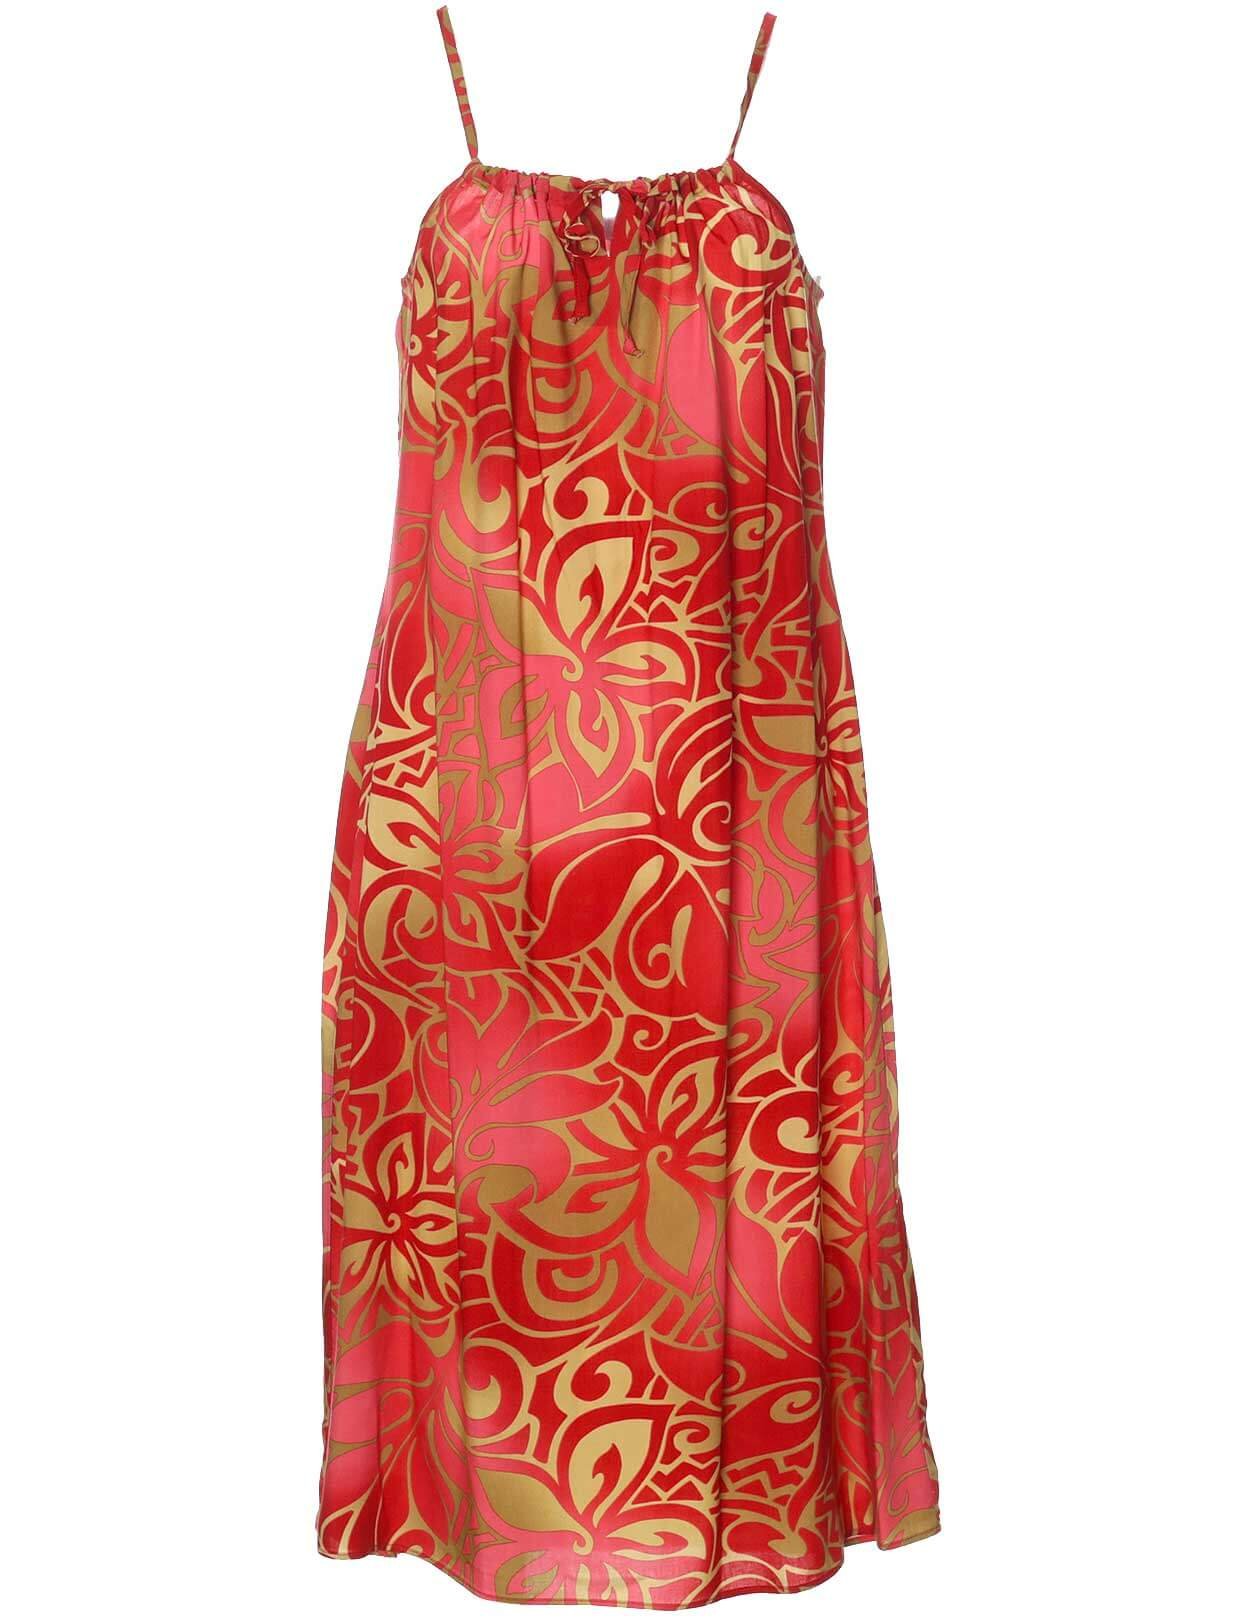 Tribal Style Midi Dress w/Front Tie Straps Red